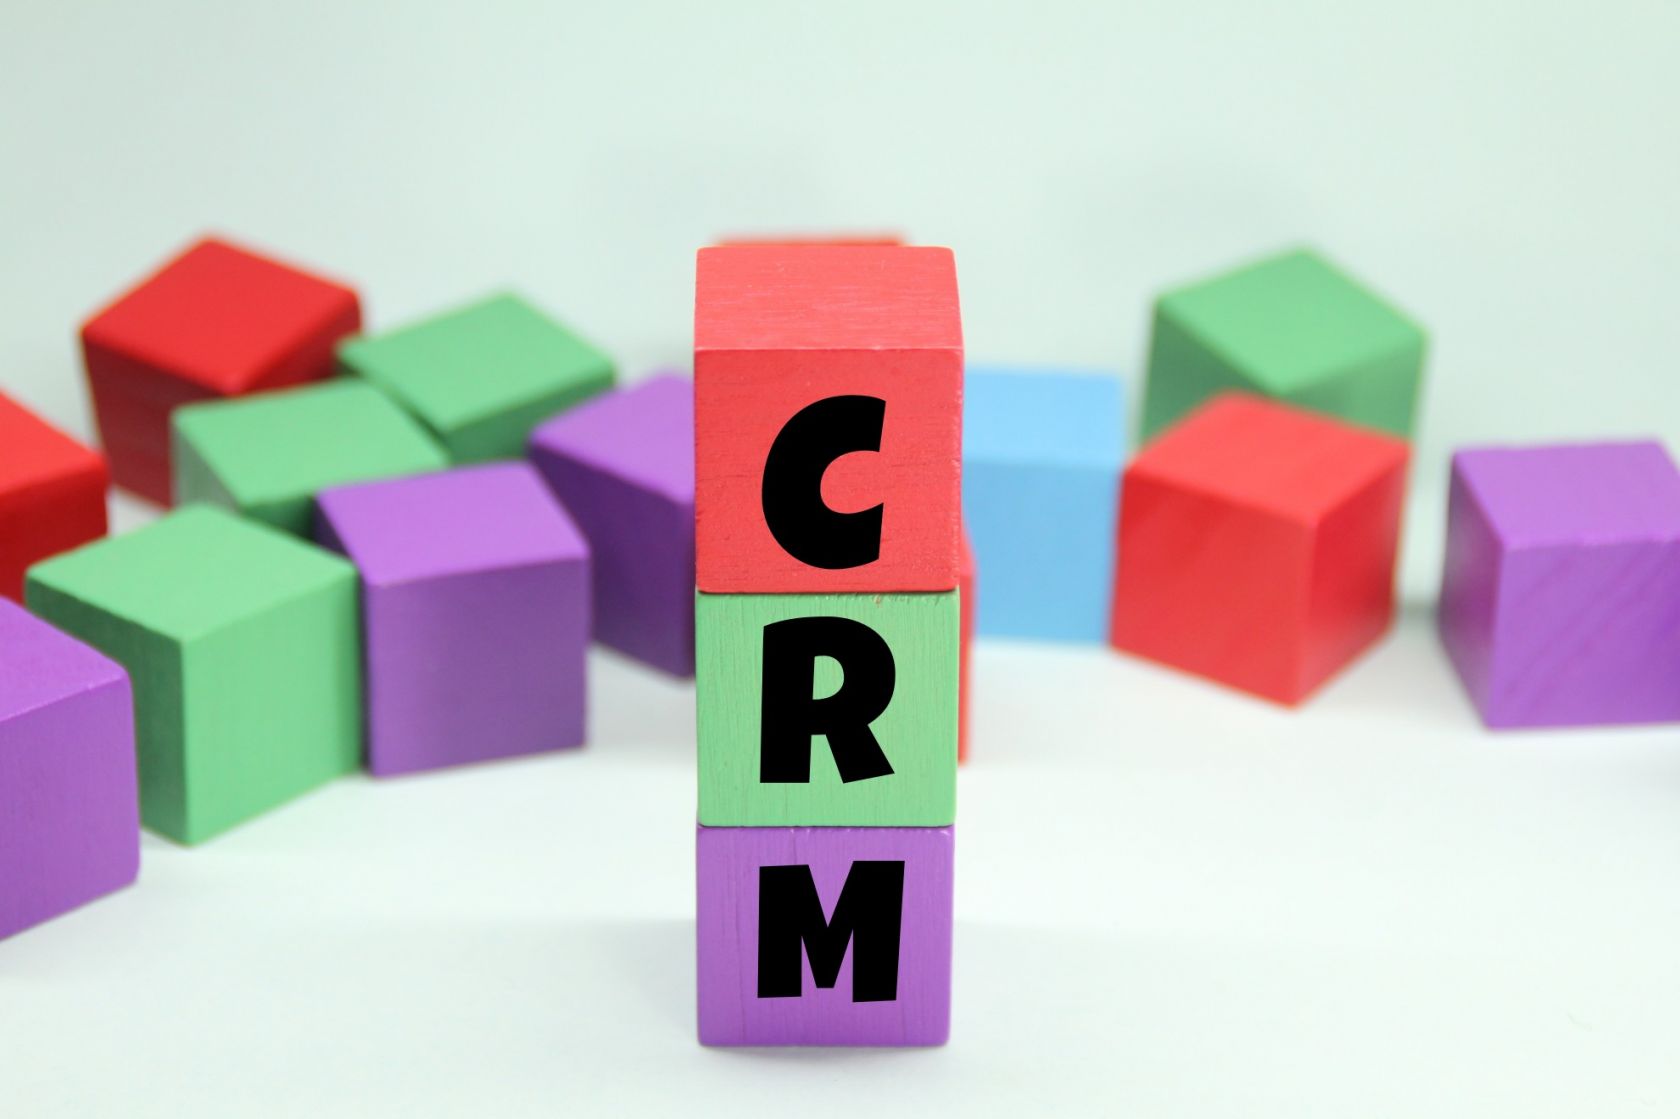 CRM system